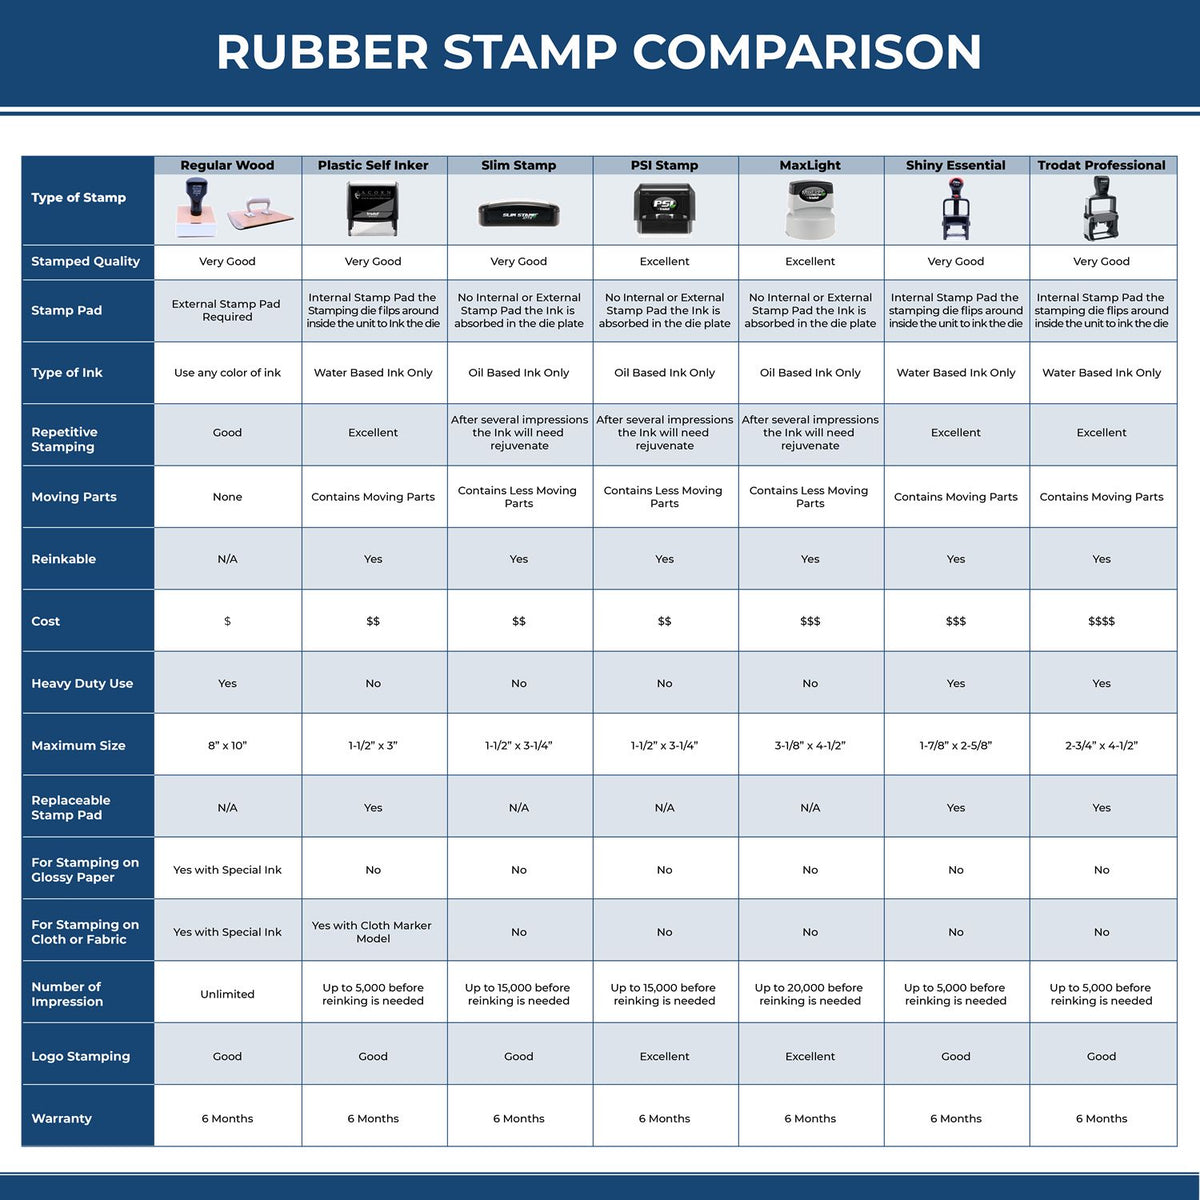 Large Final Notice Rubber Stamp 4131R Rubber Stamp Comparison